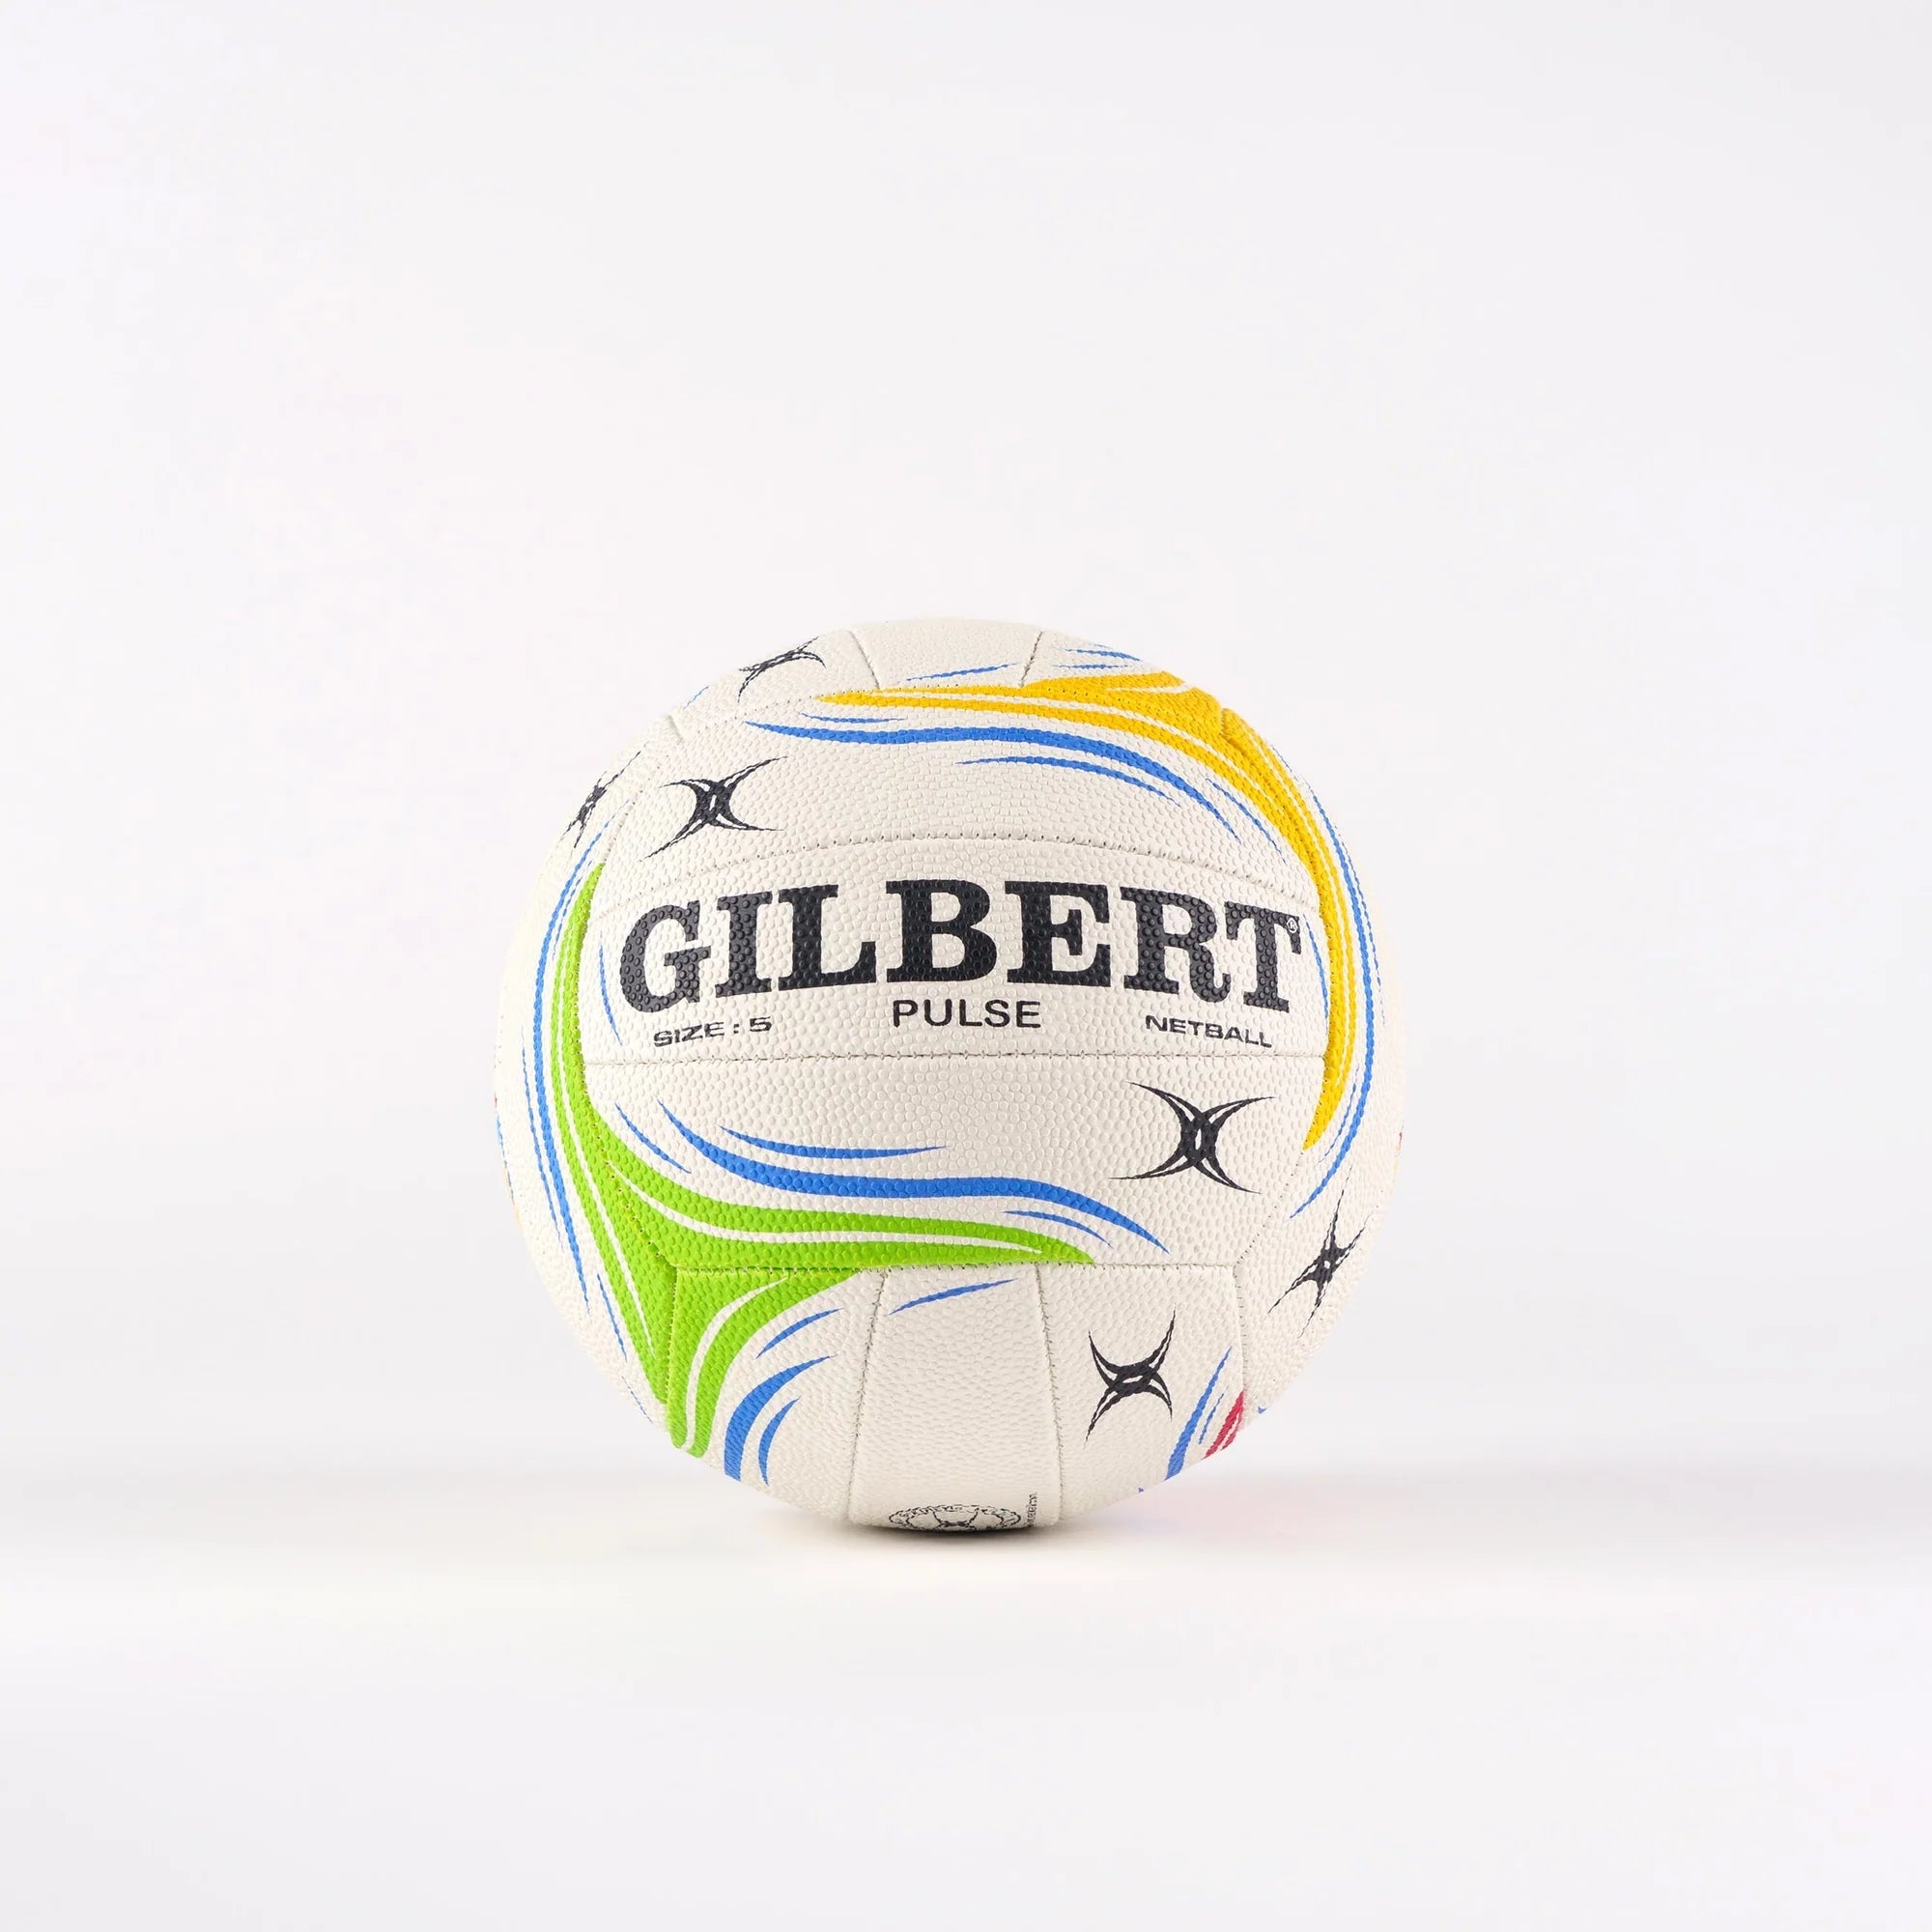 Gilbert Pulse Netball-Sports Replay - Sports Excellence-Sports Replay - Sports Excellence